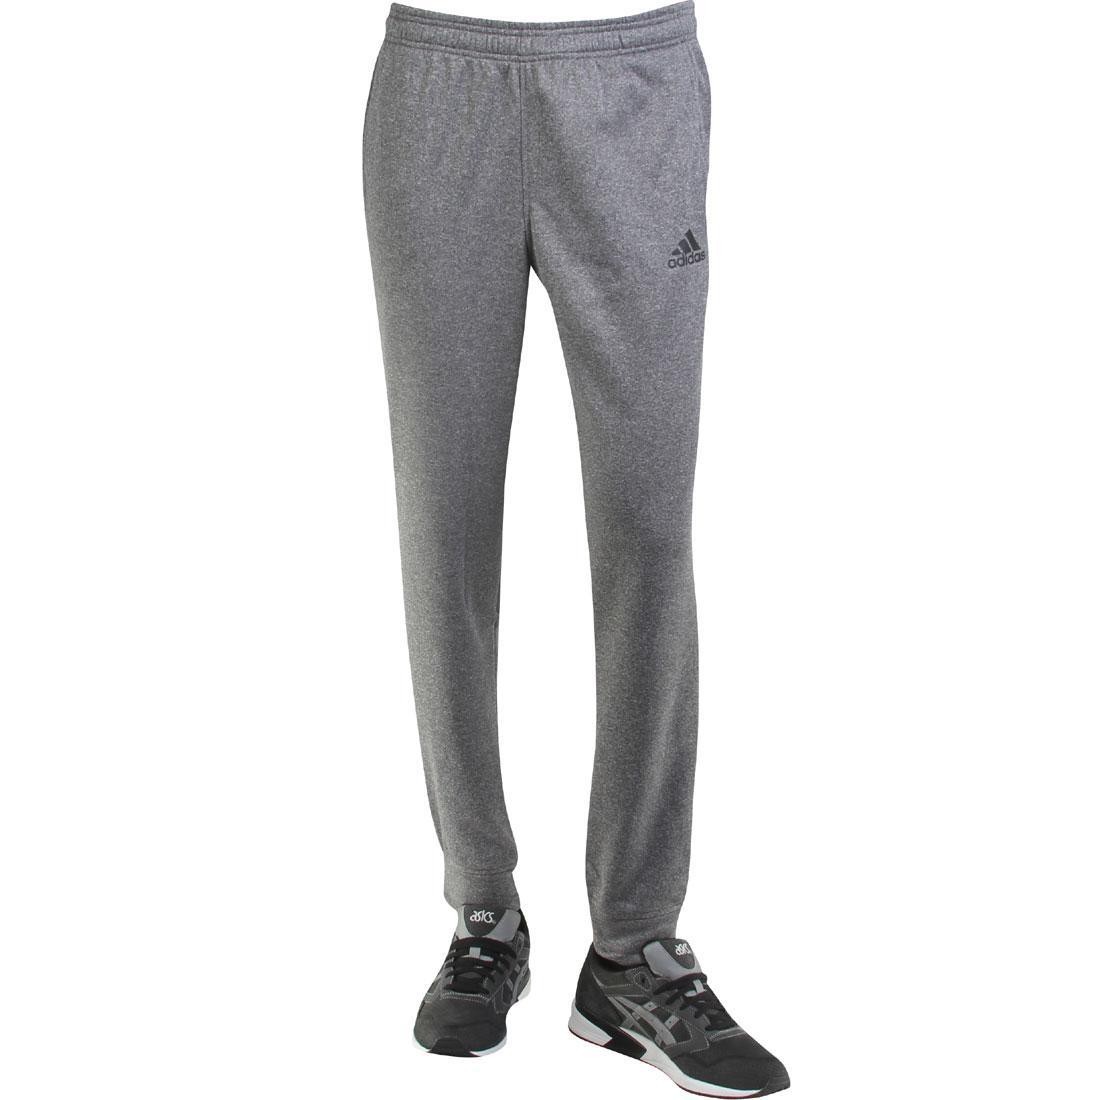 Adidas Ult Slim Pants (gray / talla / black)